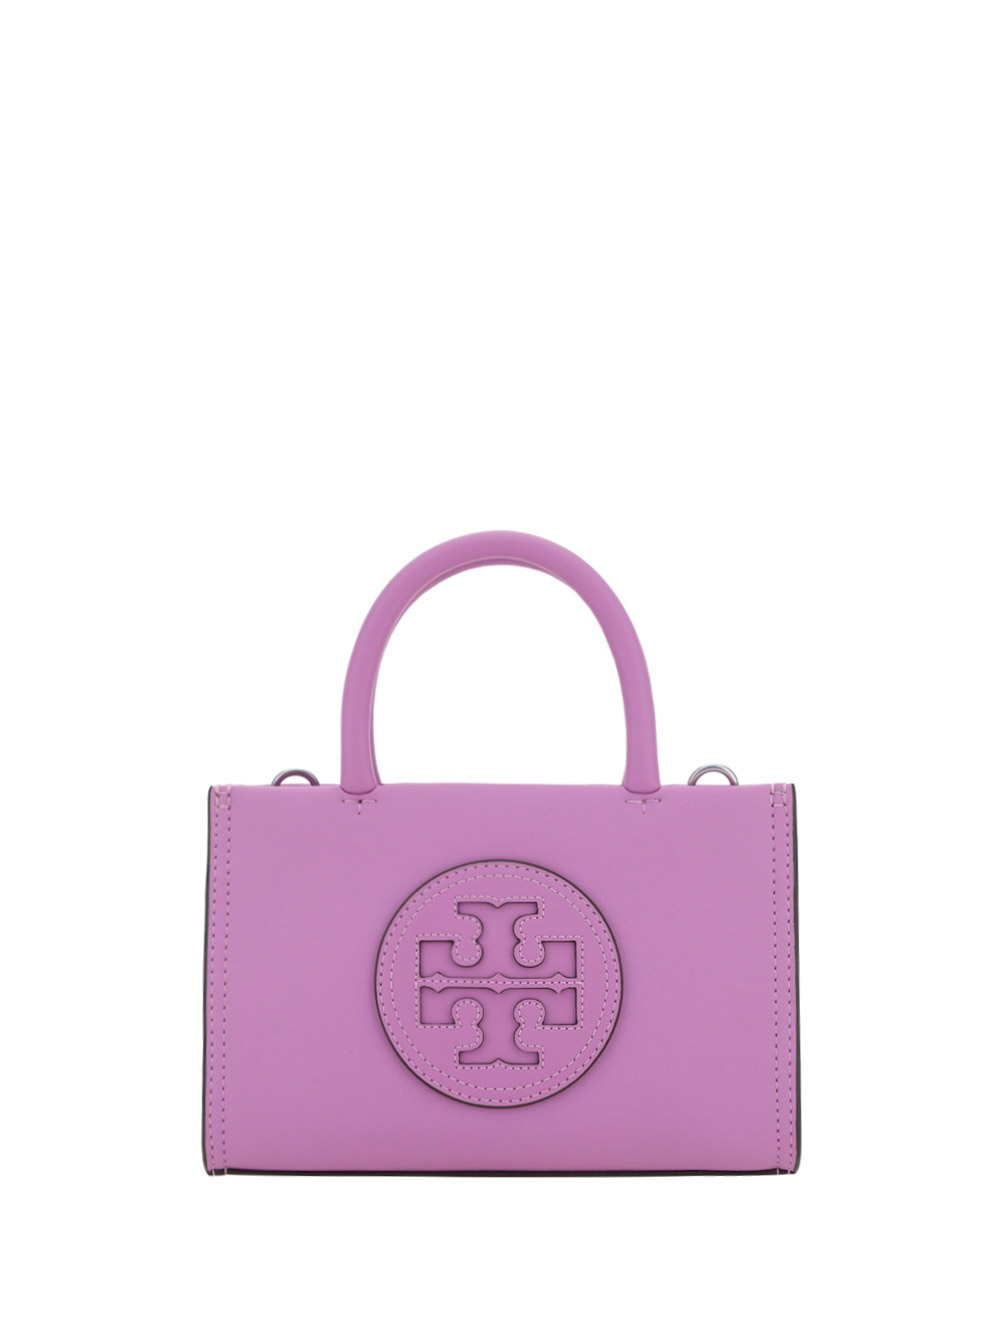 Tory Burch Ella Eco Handbag In Bright Amethyst | ModeSens